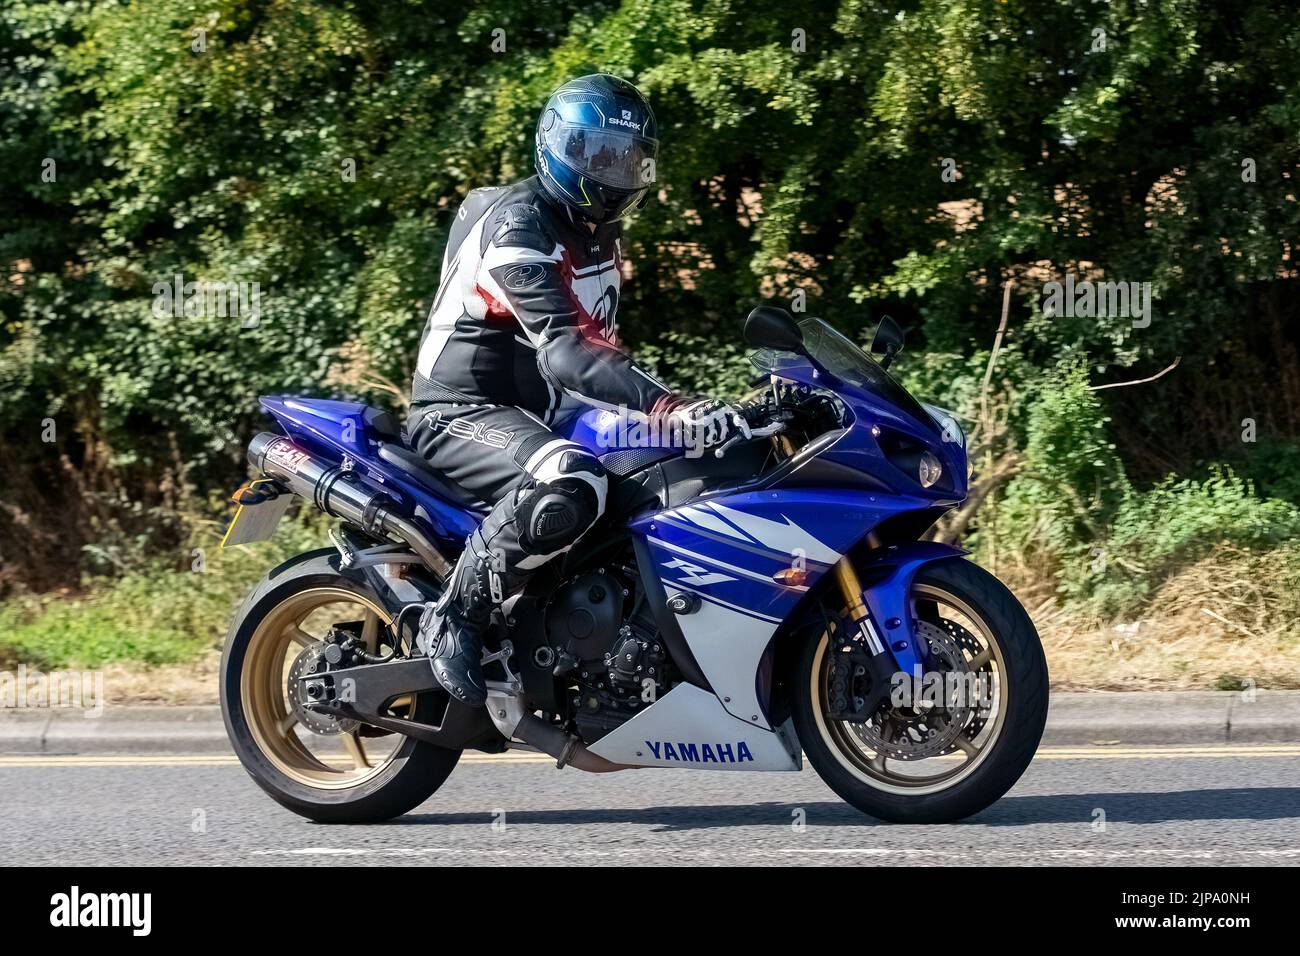 2010 998cc Yamaha R1 motorcycle Stock Photo